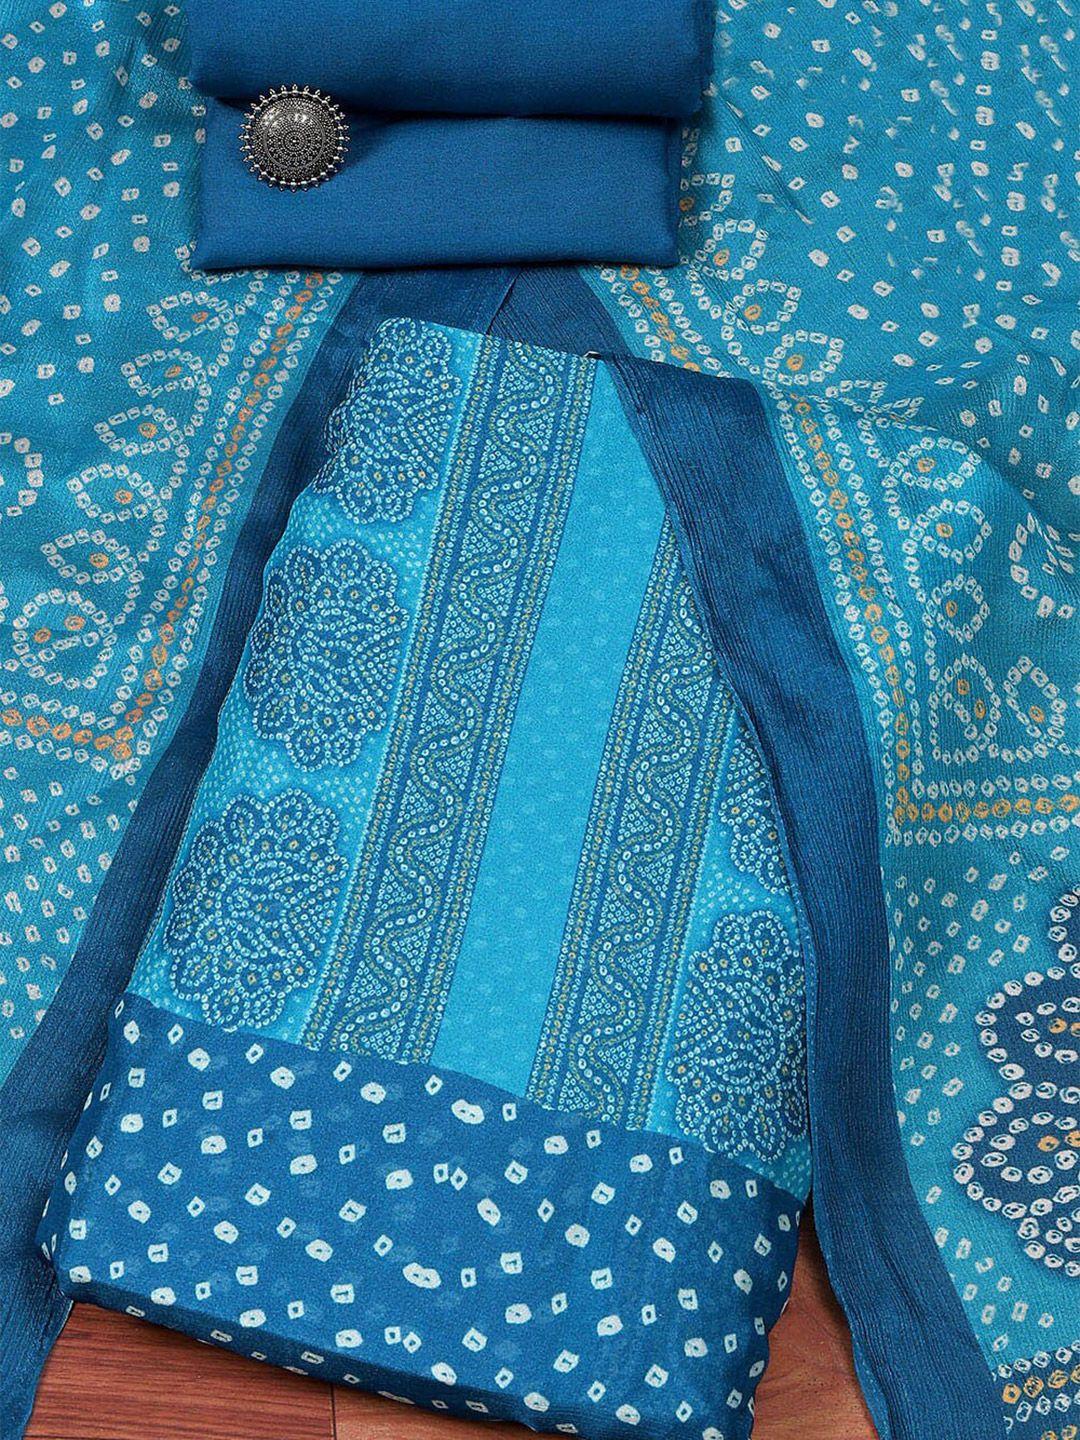 biba-bandhani-printed-unstitched-dress-material